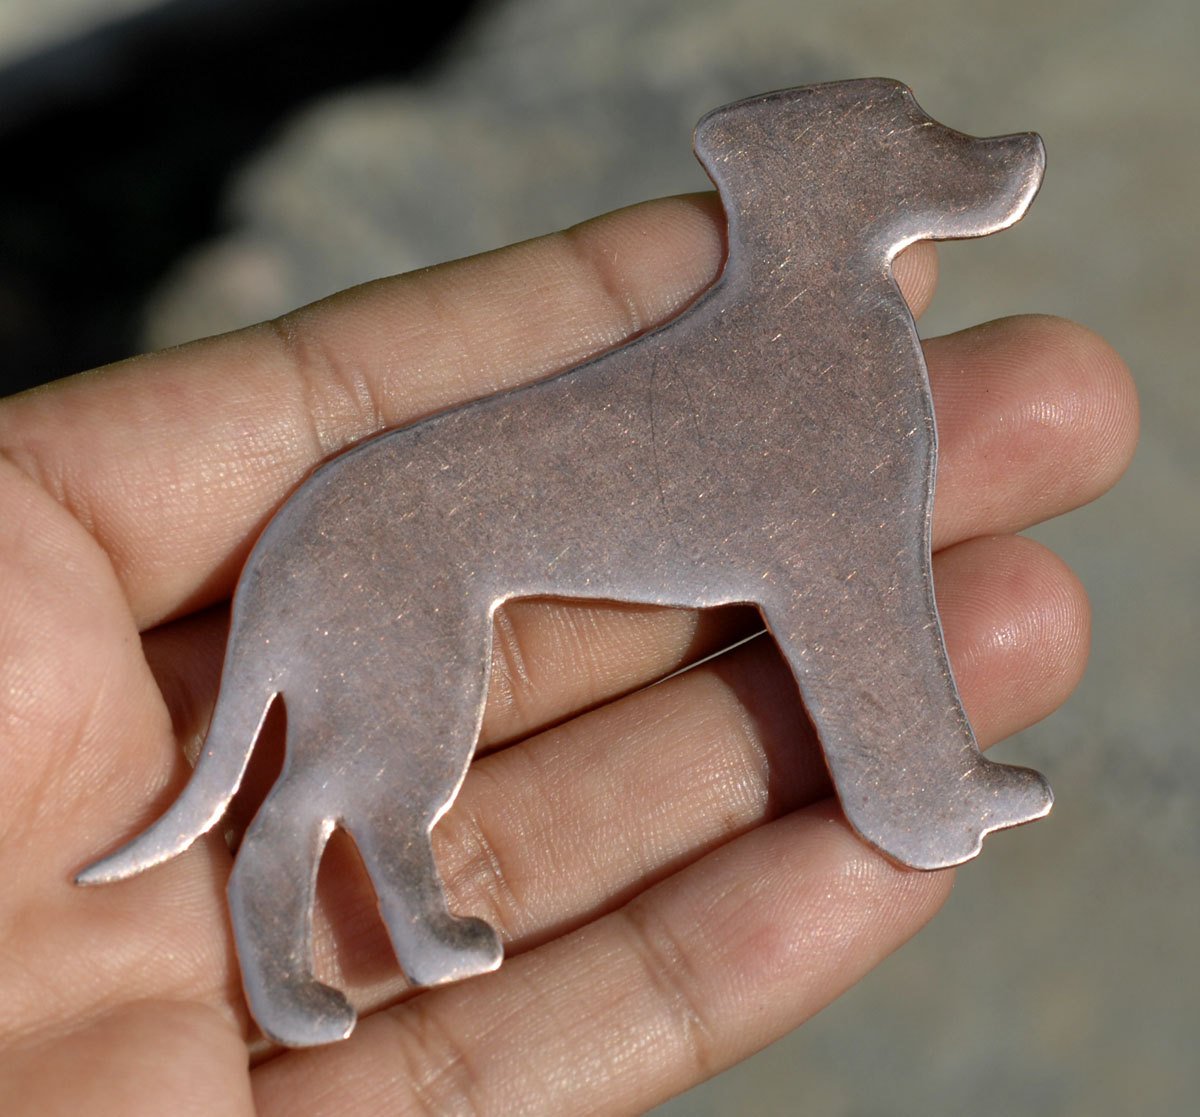 Big Dog Blank - Enameling Stamping Texturing Blanks - Metalworking Supply - 3 pieces